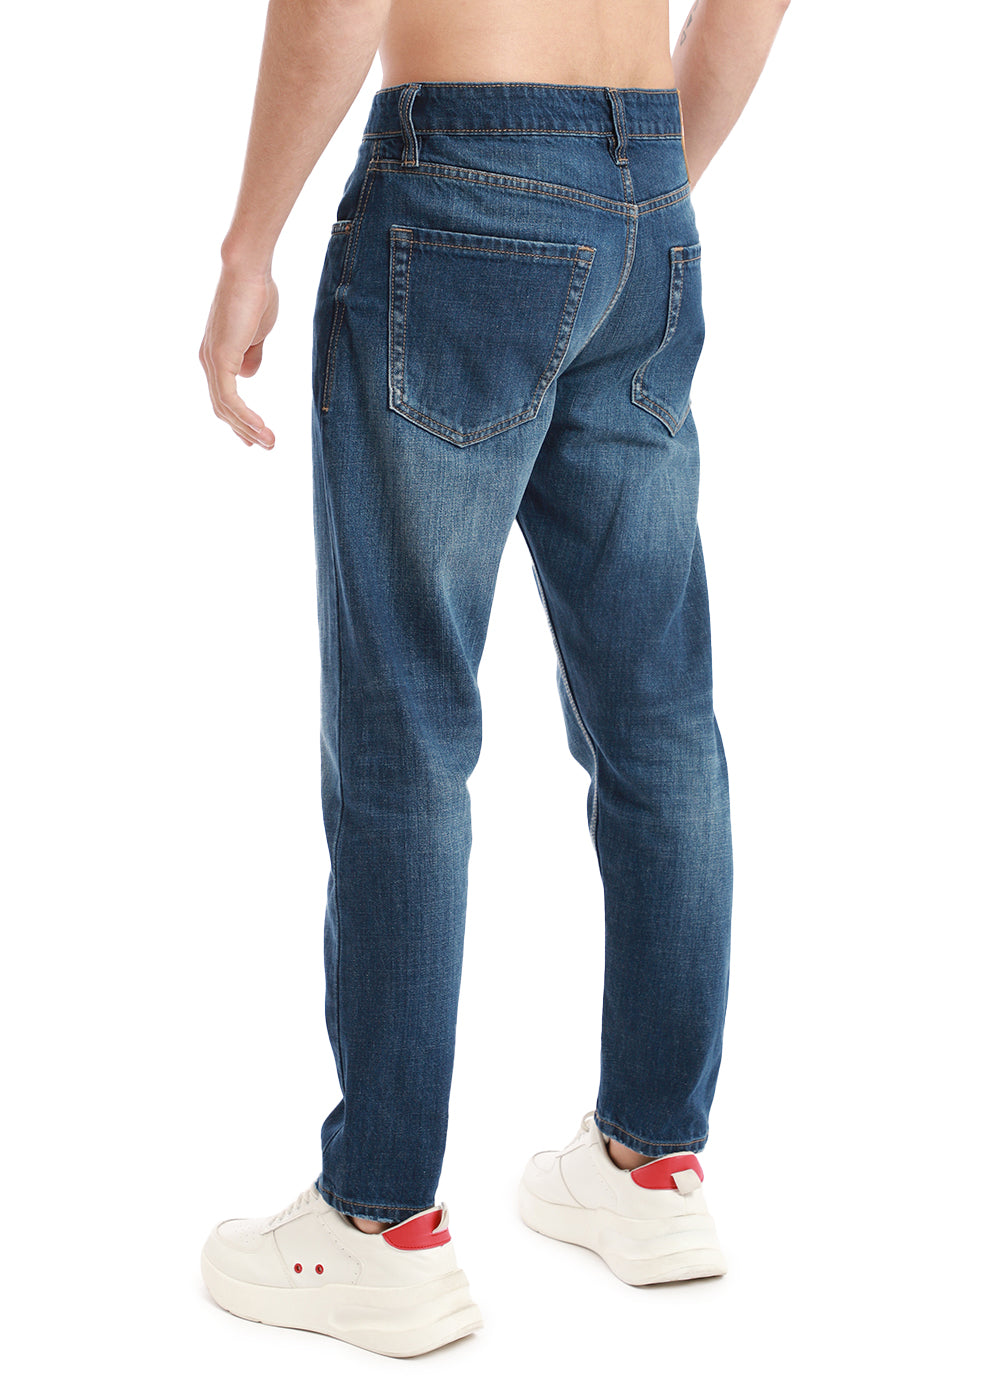 Dimmet Blue Slim fit Jeans